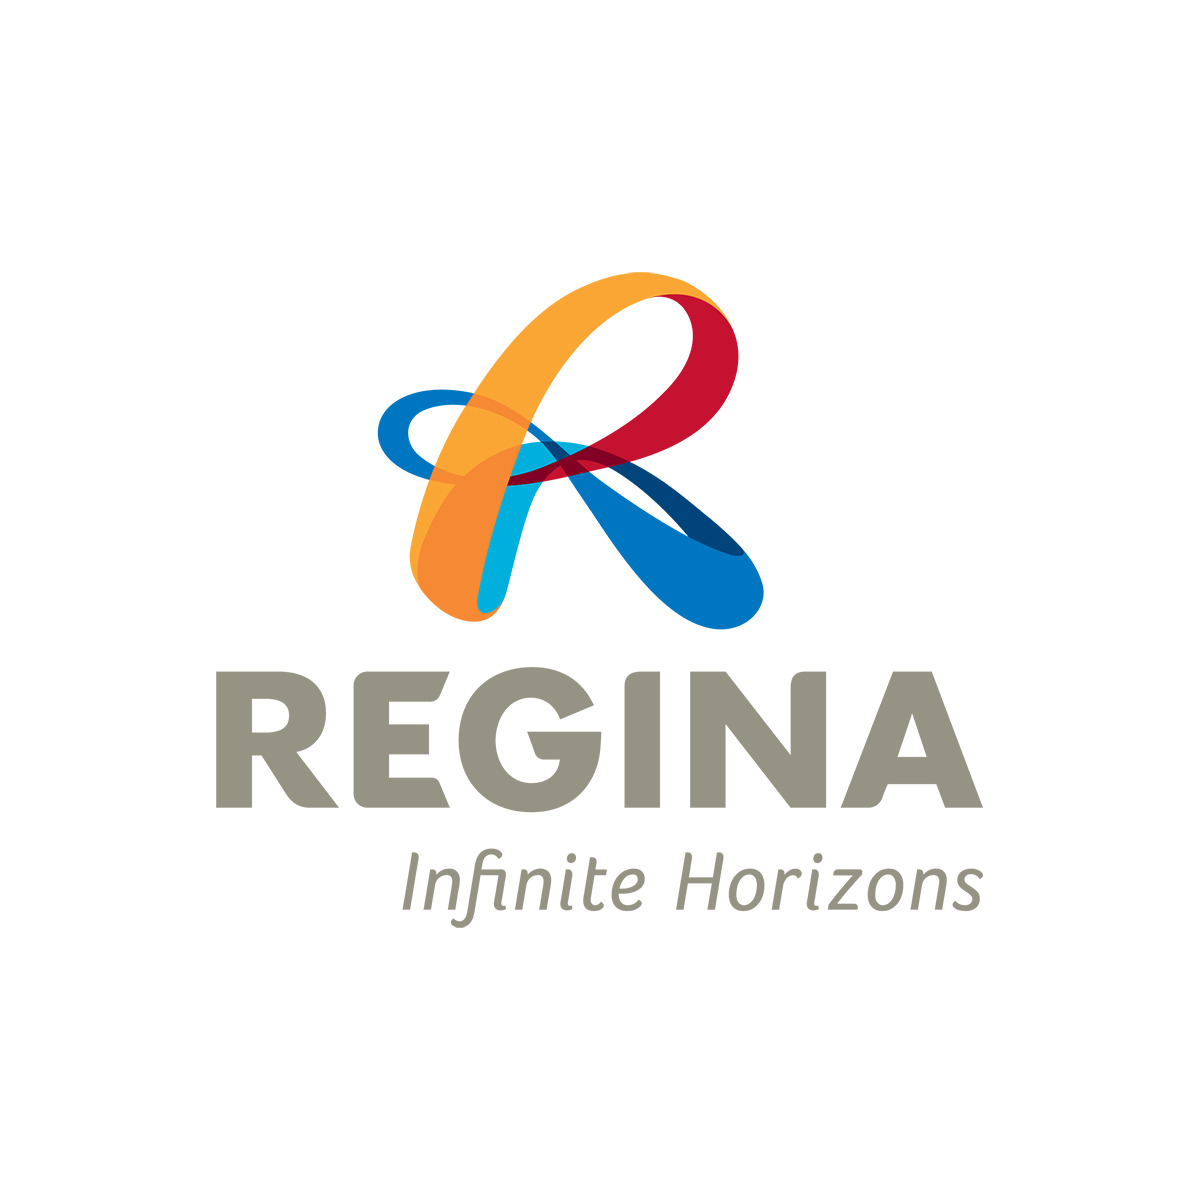 ReginaInfiniteHorizons Job Posting